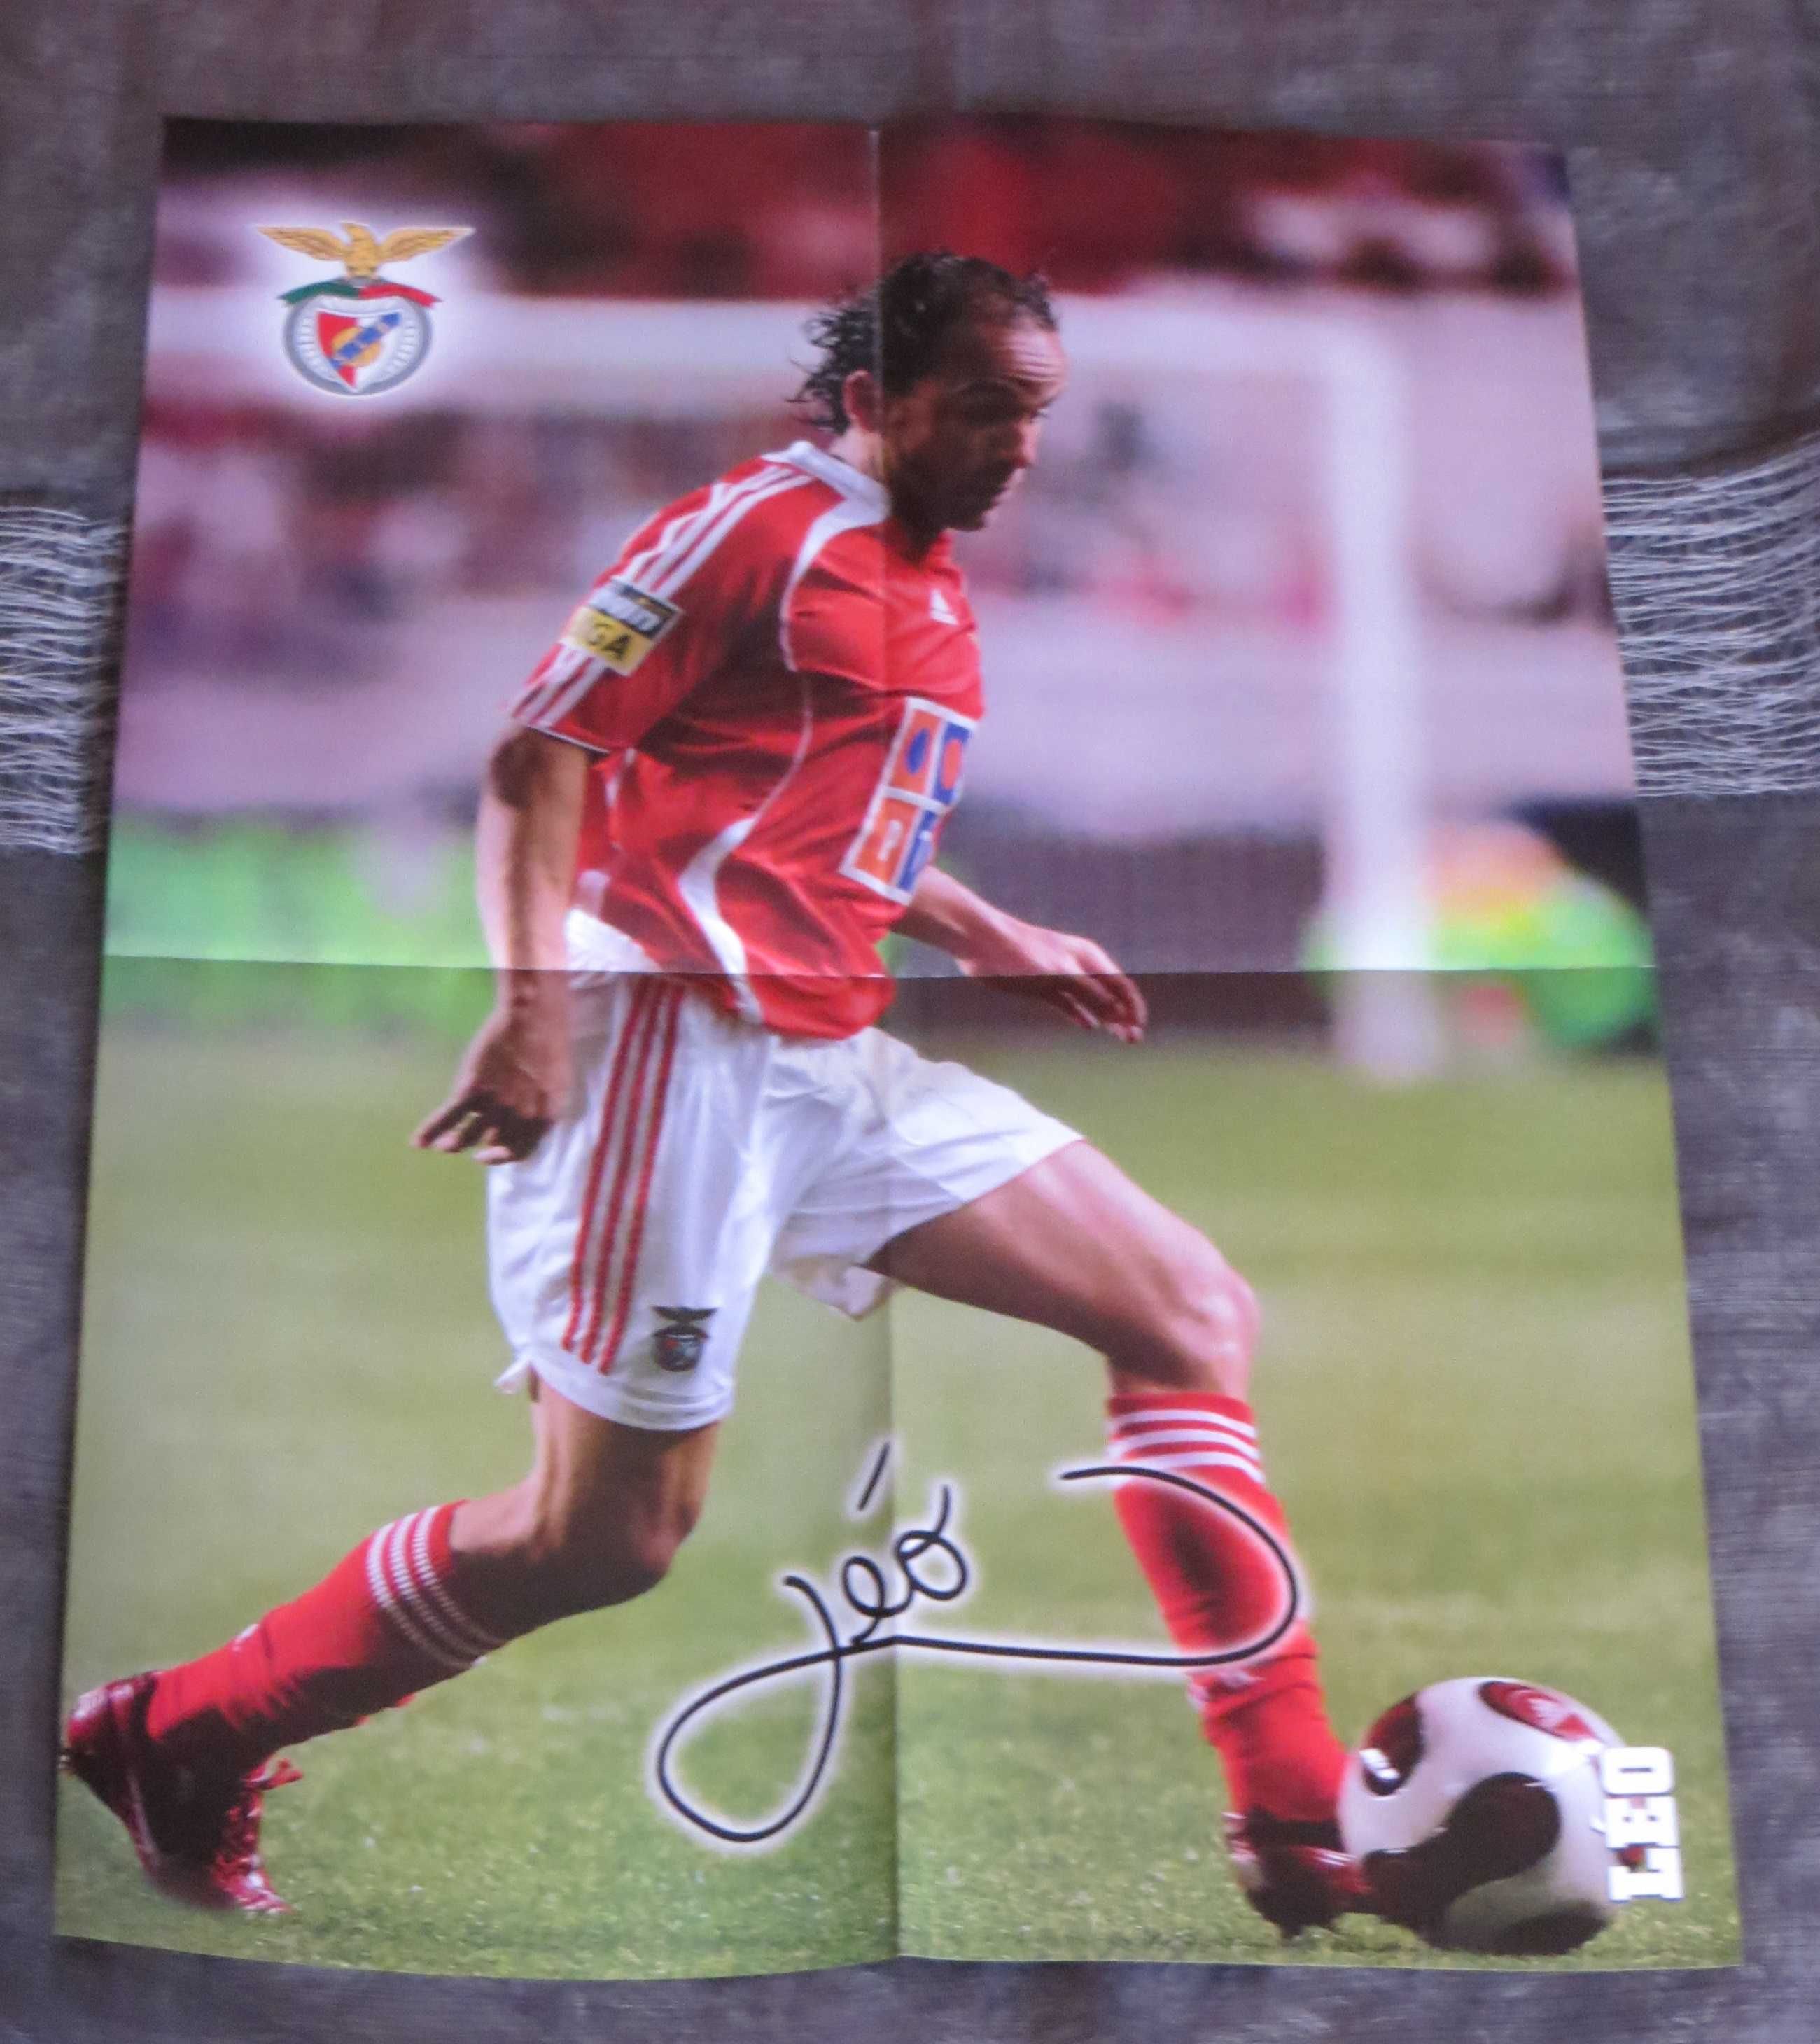 Posters Benfica com 2 jogadores cada poster - Medida : 58 X 43 cm